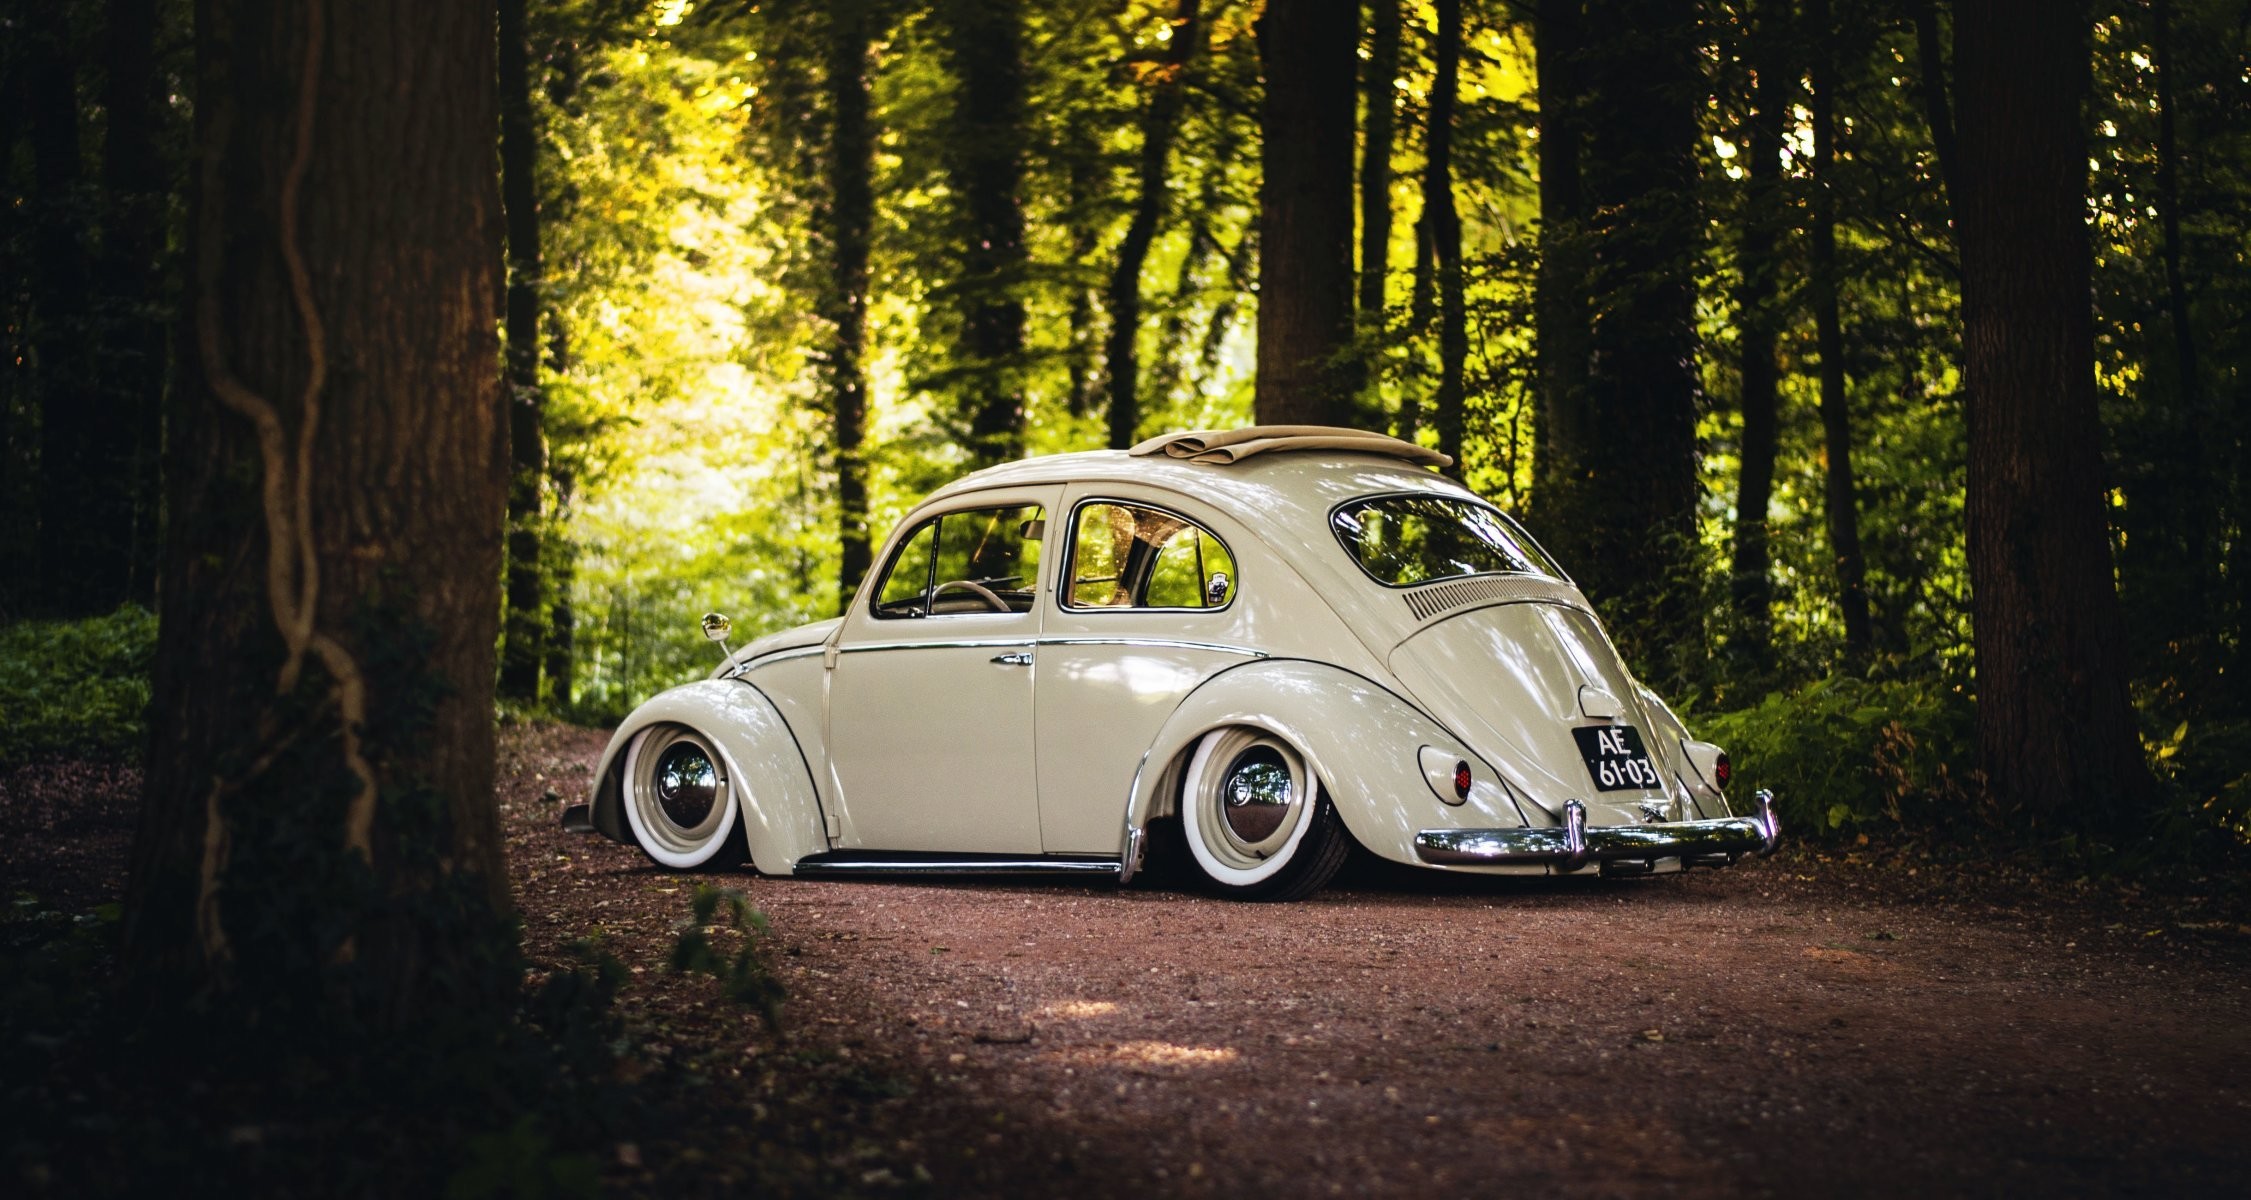 2251x1200 volkswagen beetle sunroof wheels rear trees road forest sunshine